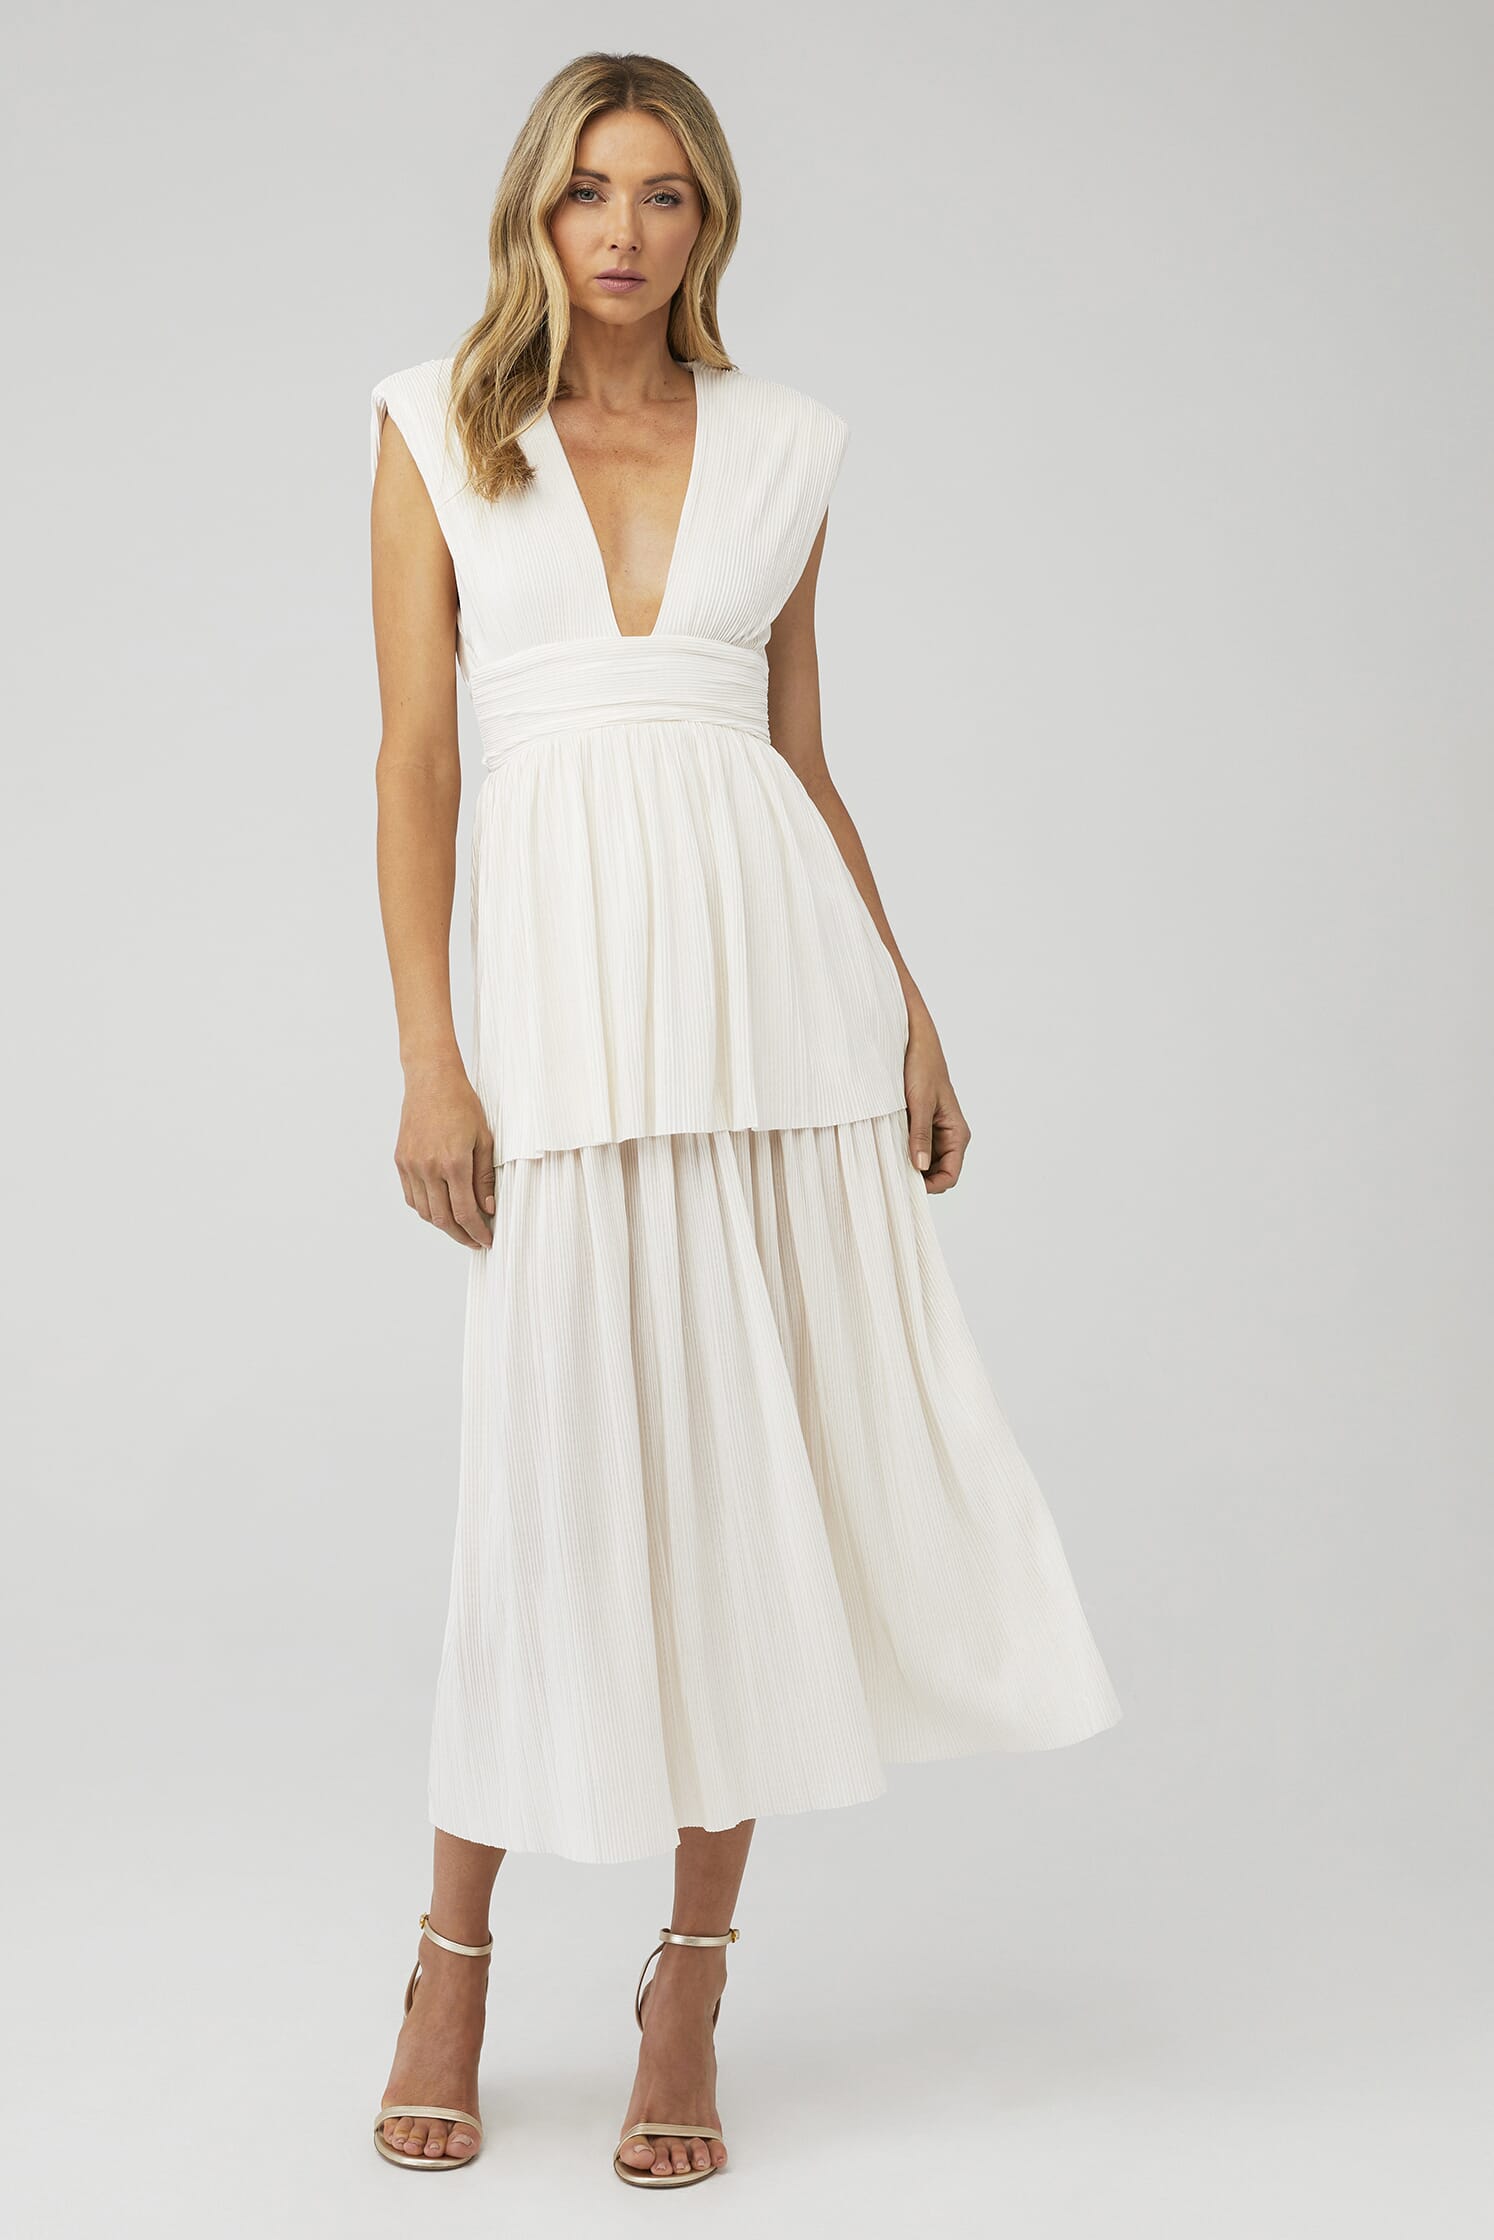 SABINA MUSAYEV | Ophelia Dress in Off White| FashionPass